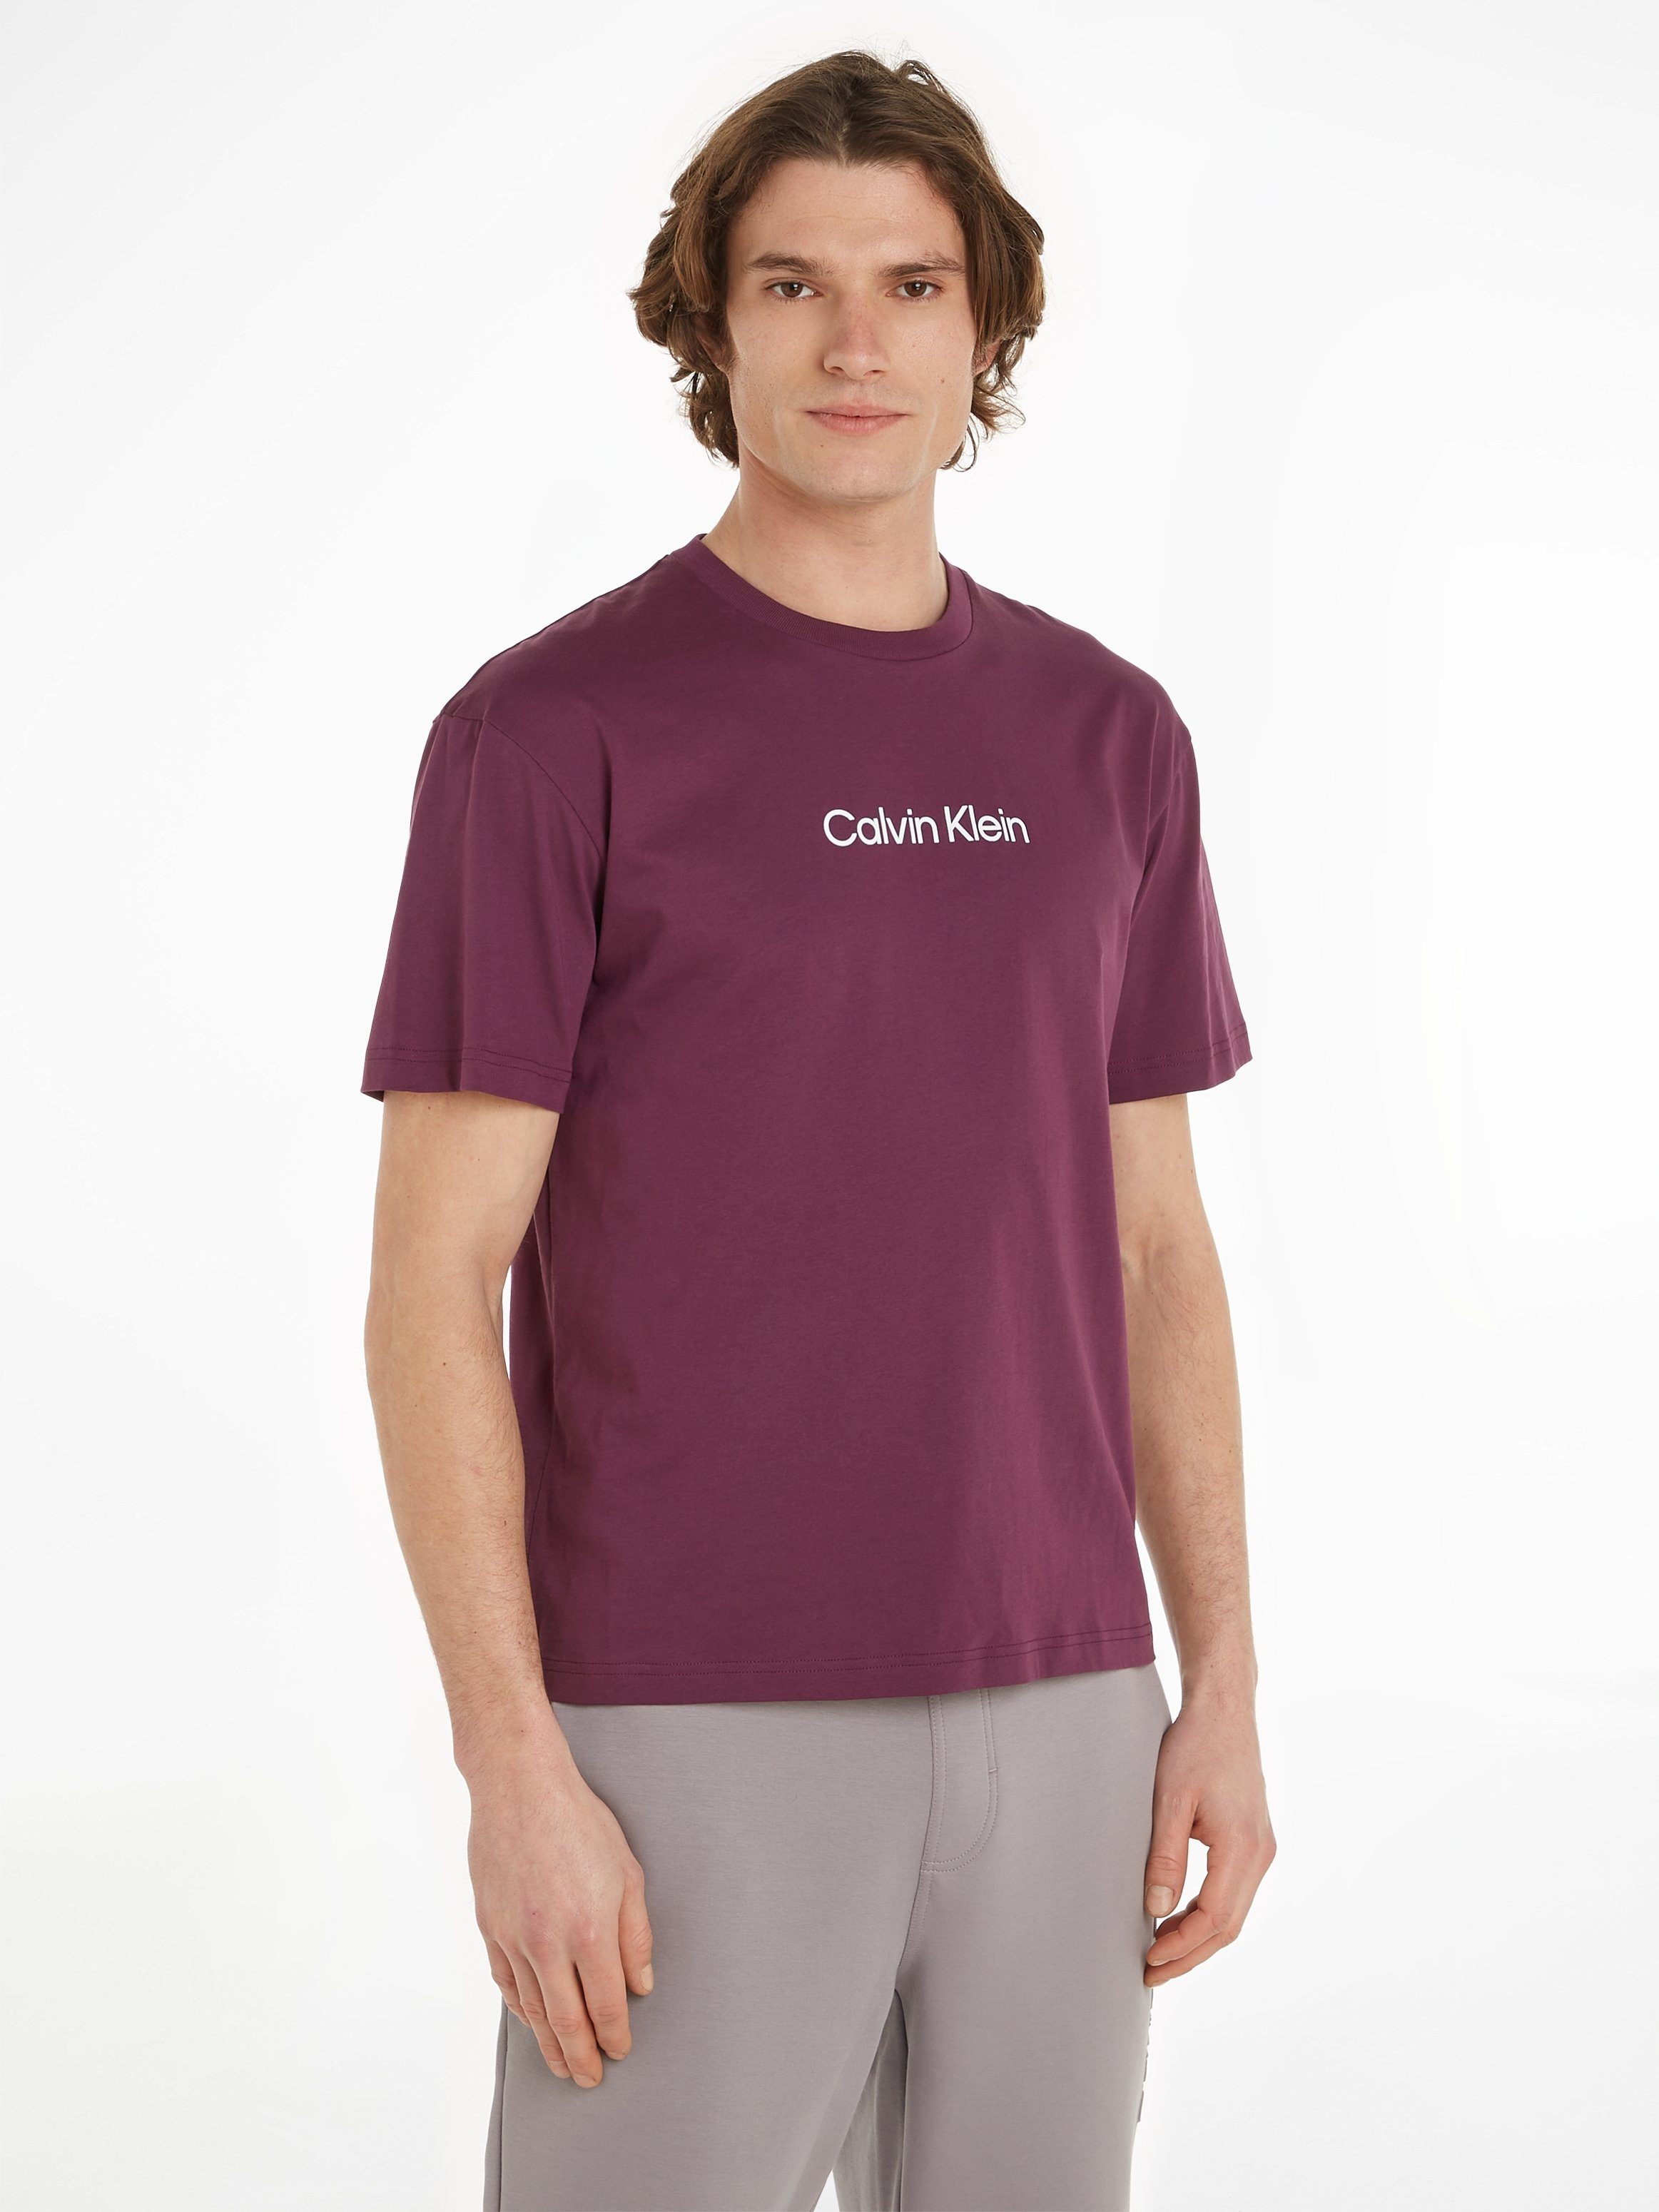 Plum HERO Markenlabel Italian T-SHIRT T-Shirt Klein COMFORT aufgedrucktem LOGO mit Calvin